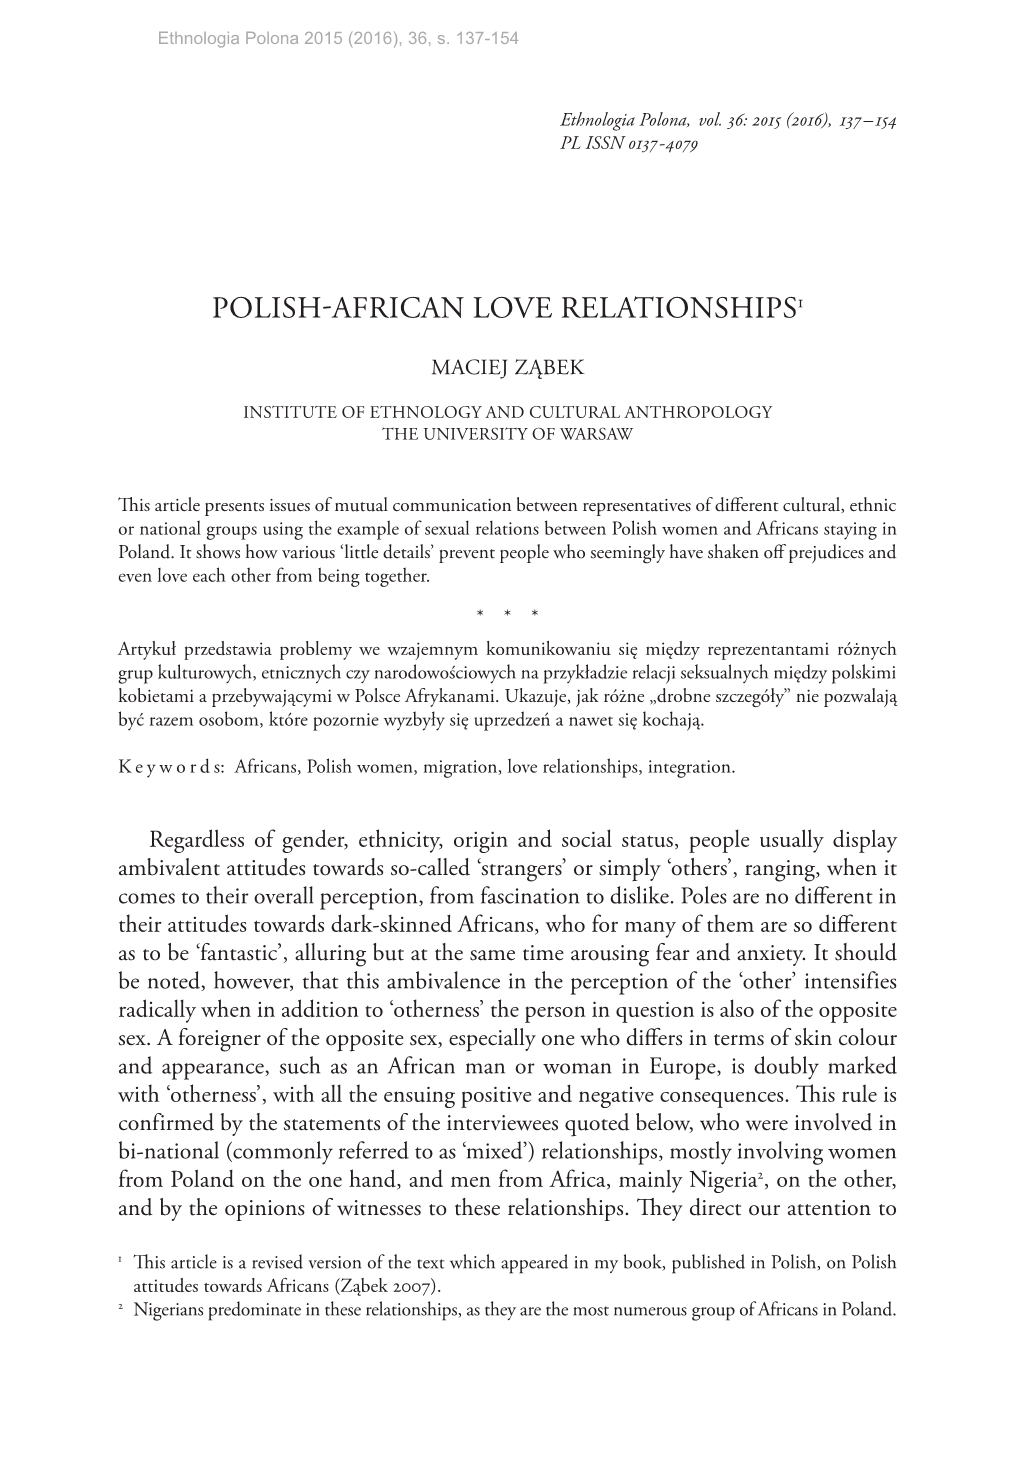 Polish-African Love Relationships1